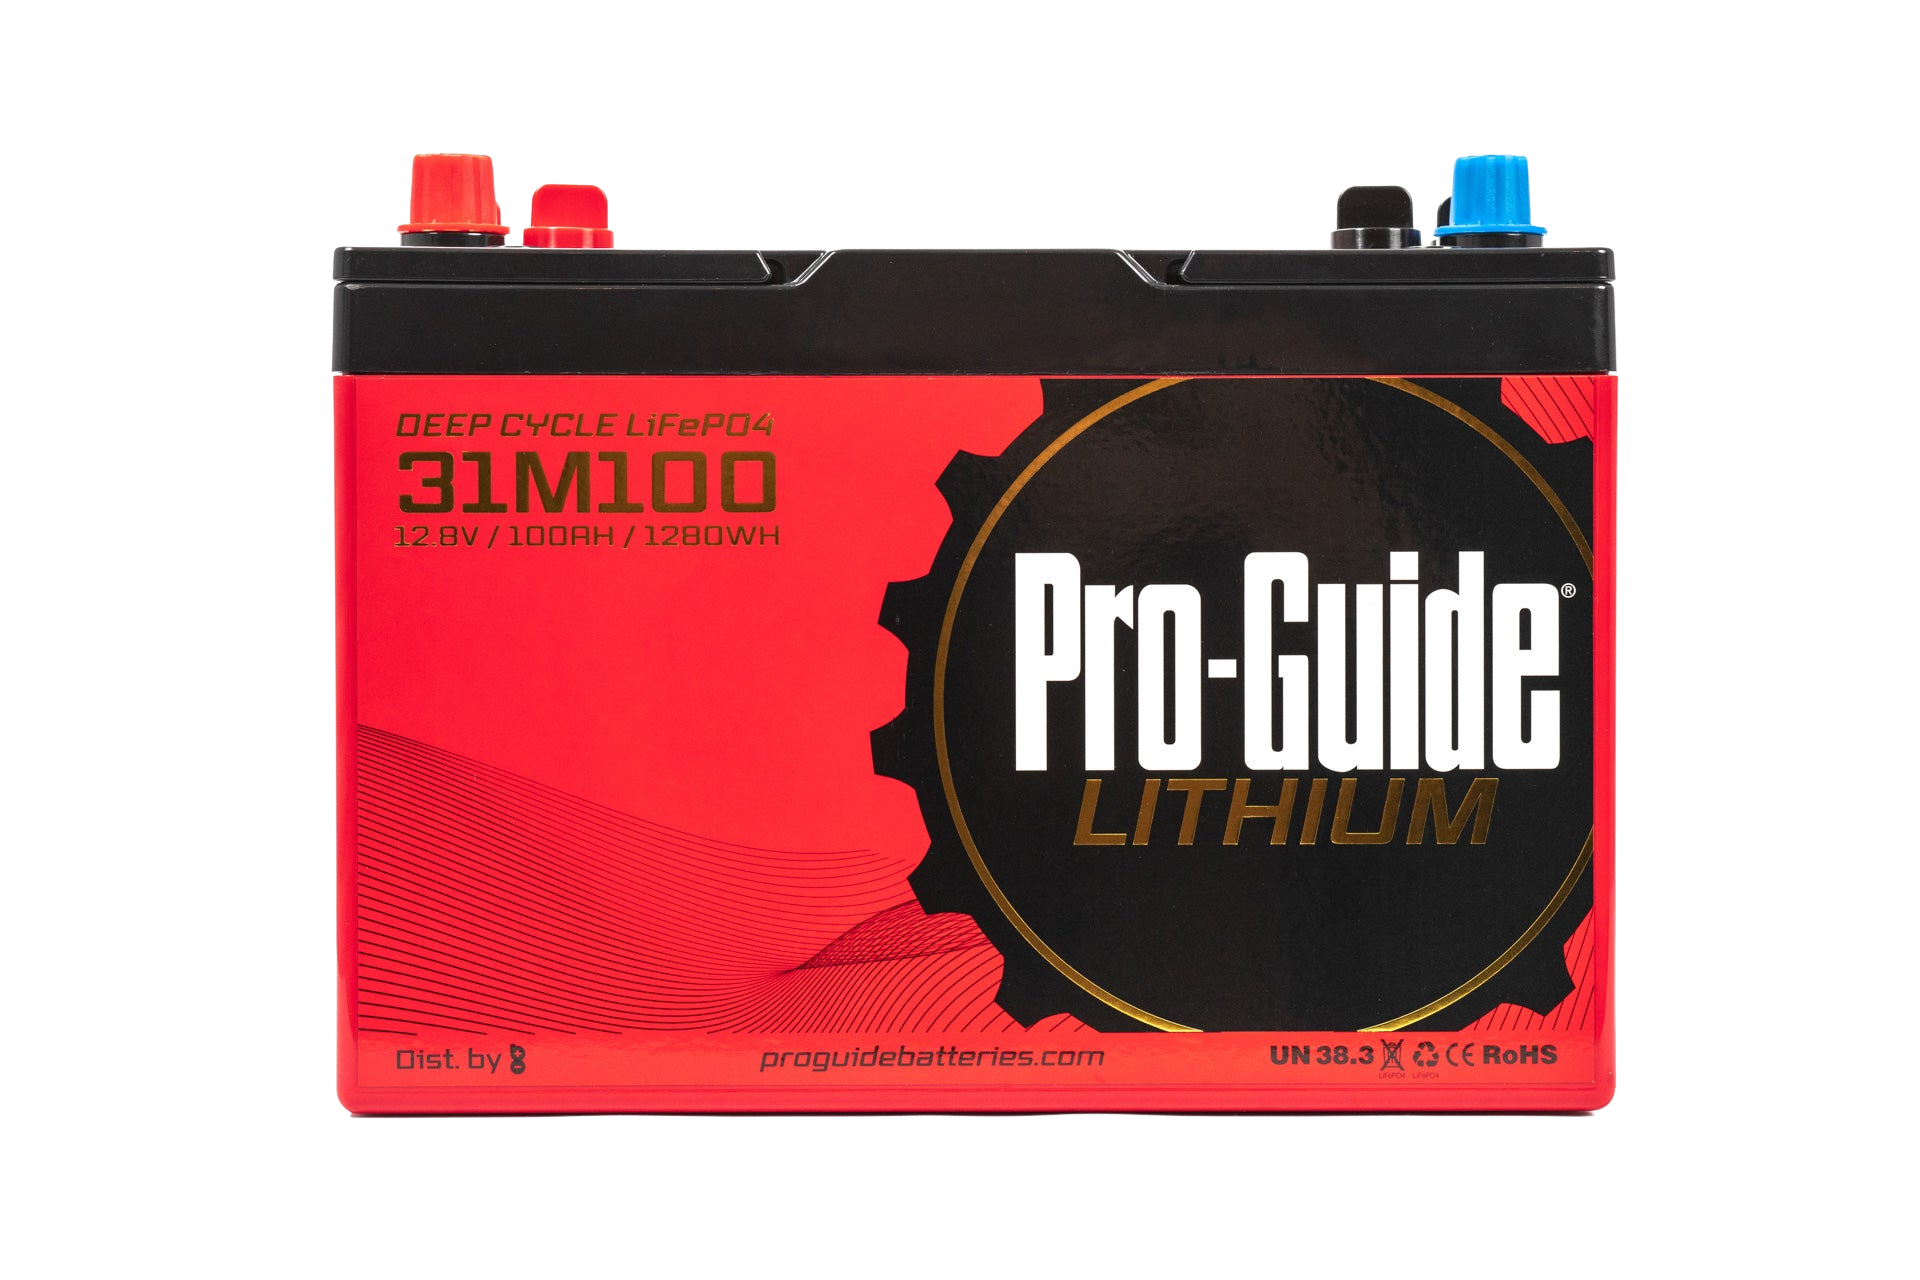 Pro-Guide Lithium // 31M100